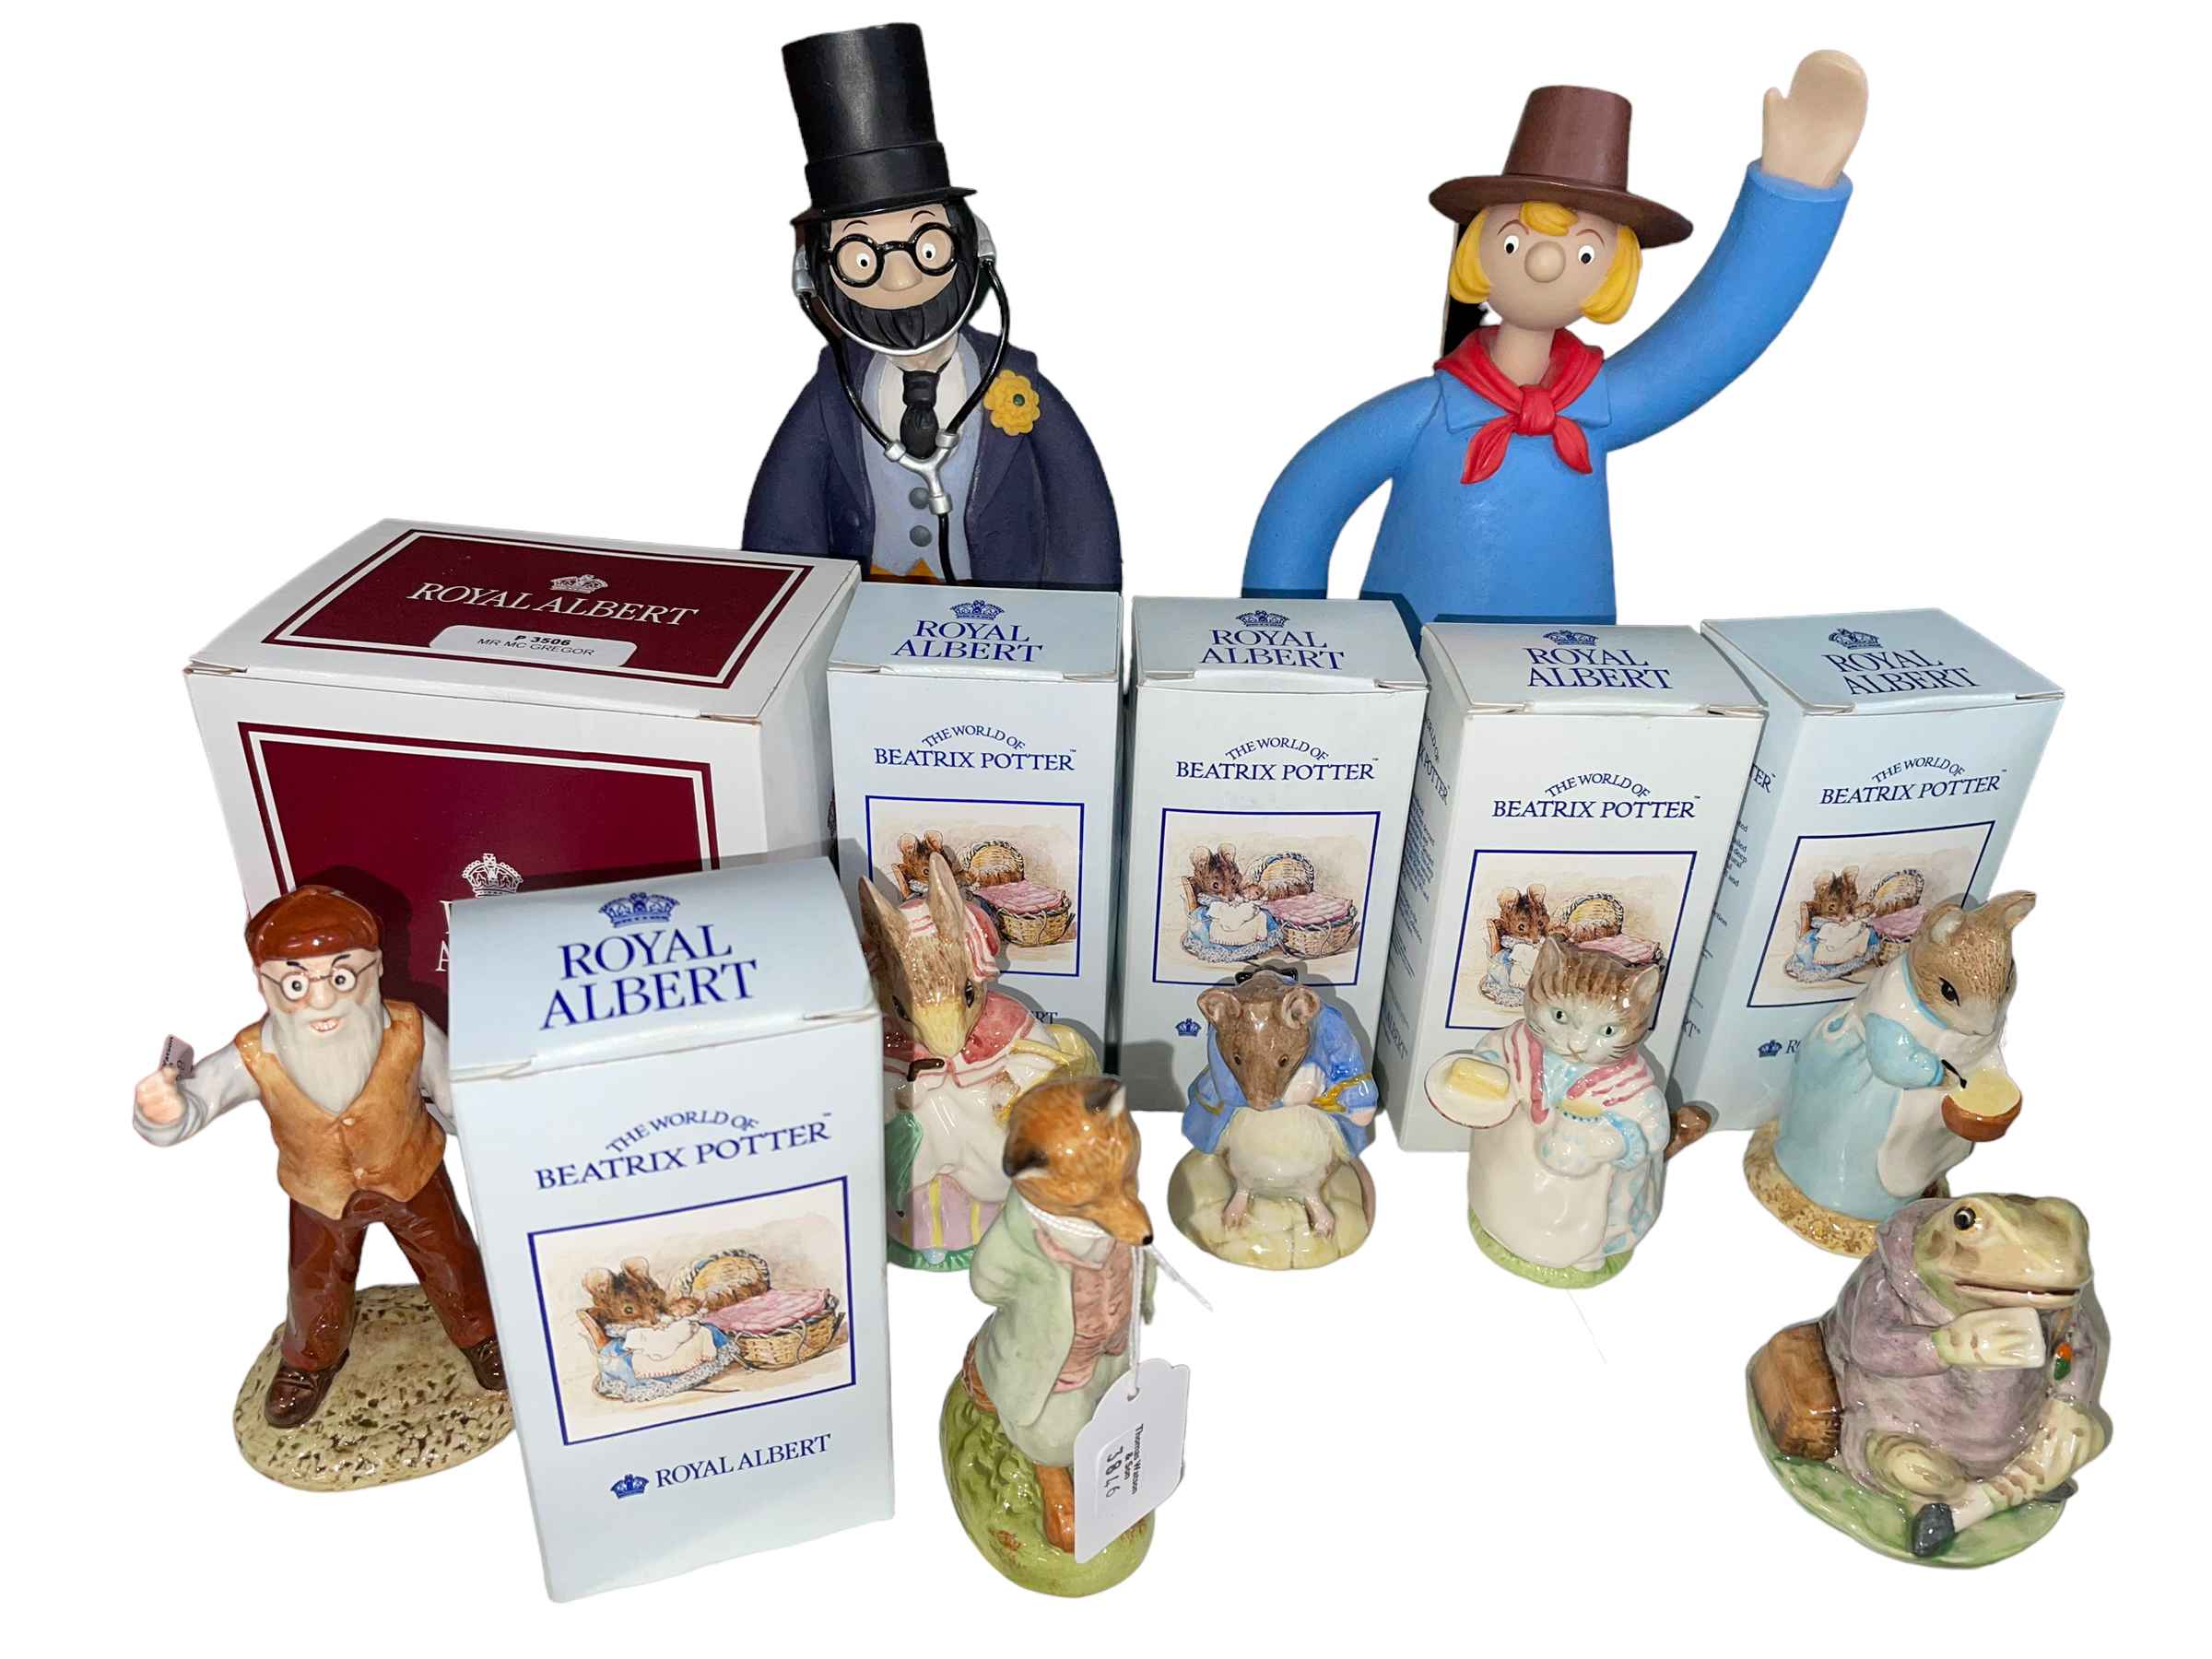 Seven Royal Albert Beatrix Potter figurines and two Robert Harrop limited edition sculptures,